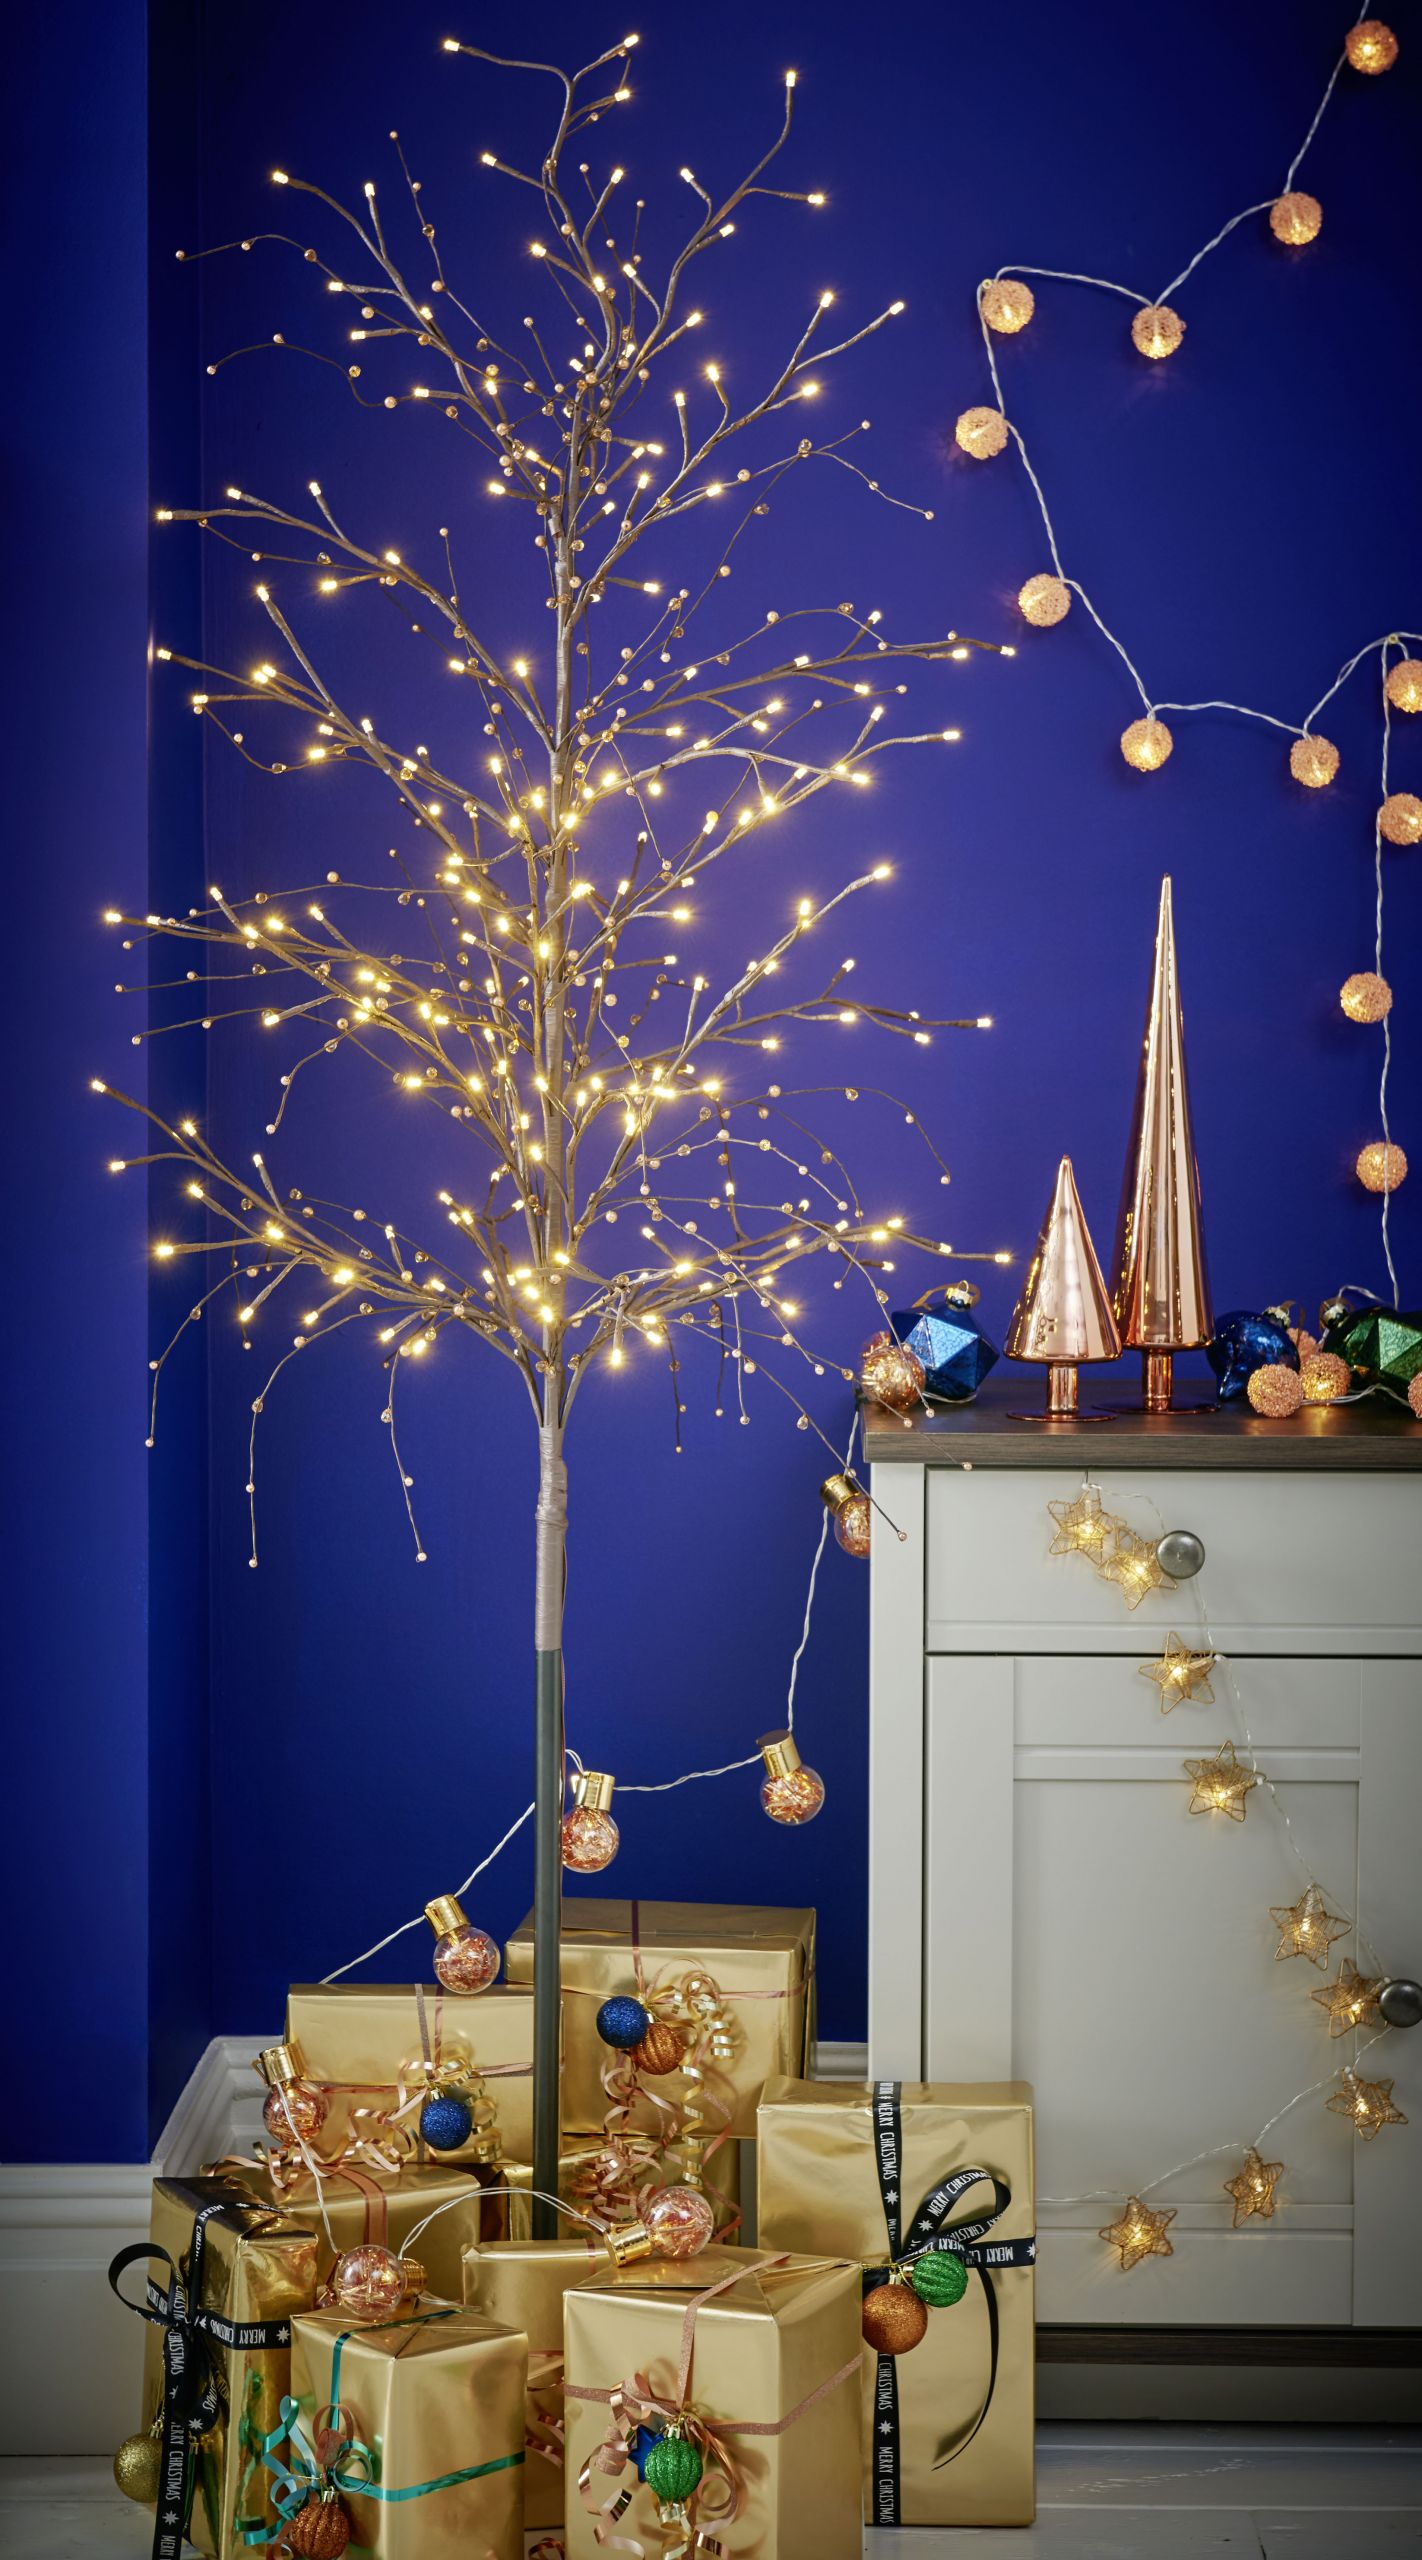 Christmas Indoor Lights
 How To Choose The Best Indoor Christmas Lights